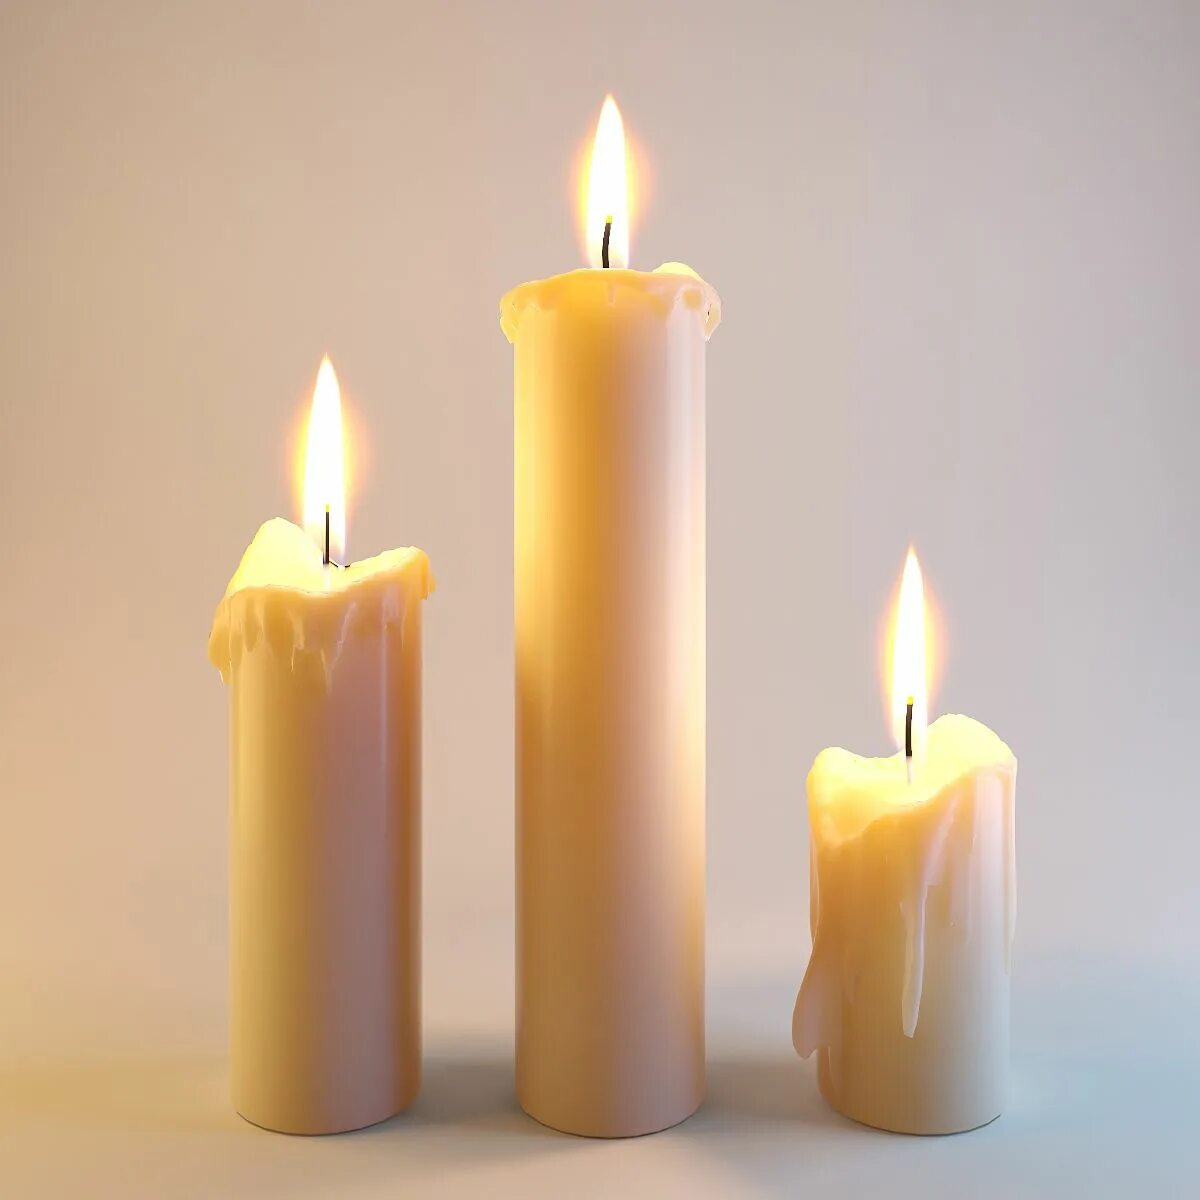 Свечка. Горящая свеча. Тающие свечи. Тающая свеча. Горят три свечи